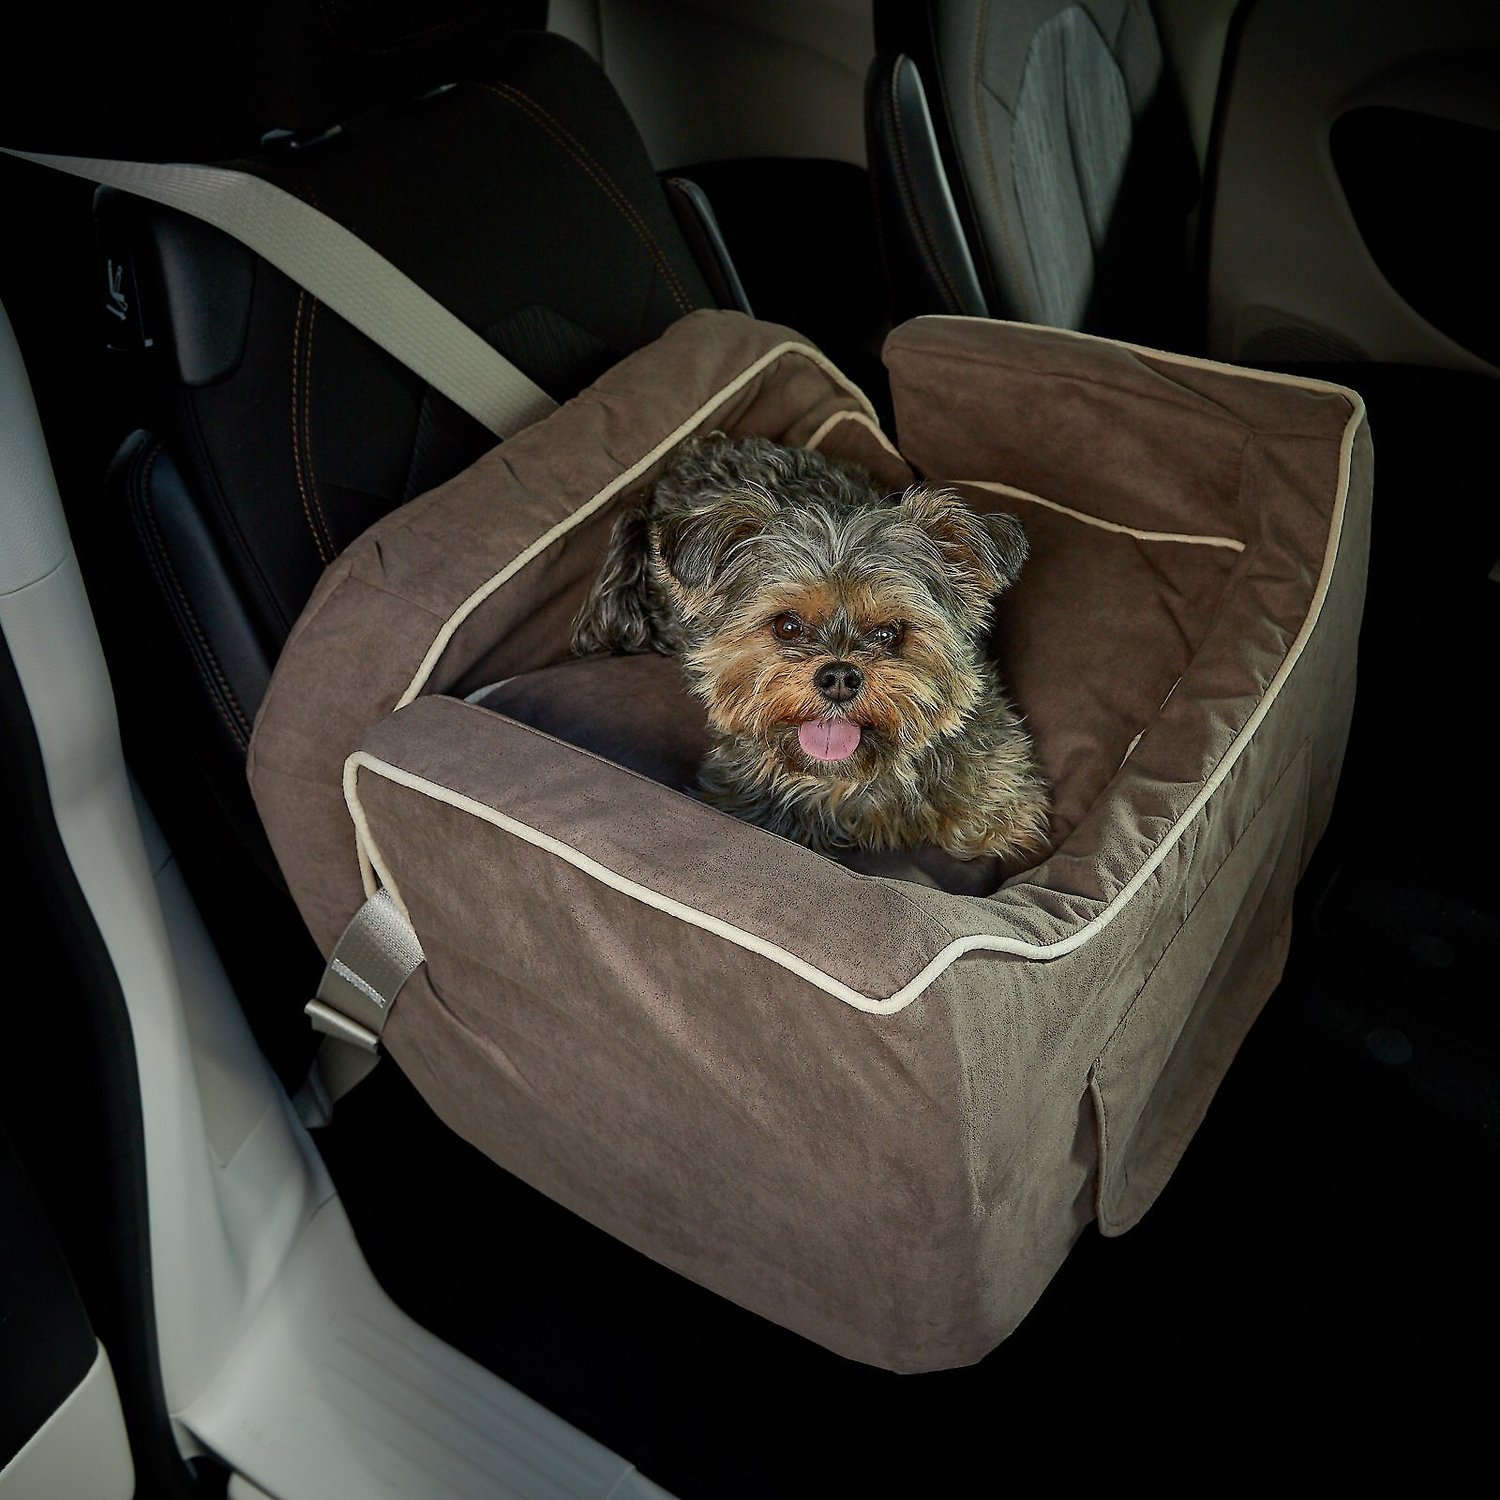 Snoozer 37475 Large Luxury II Lookout Pet Car Seat Buckskin with Java